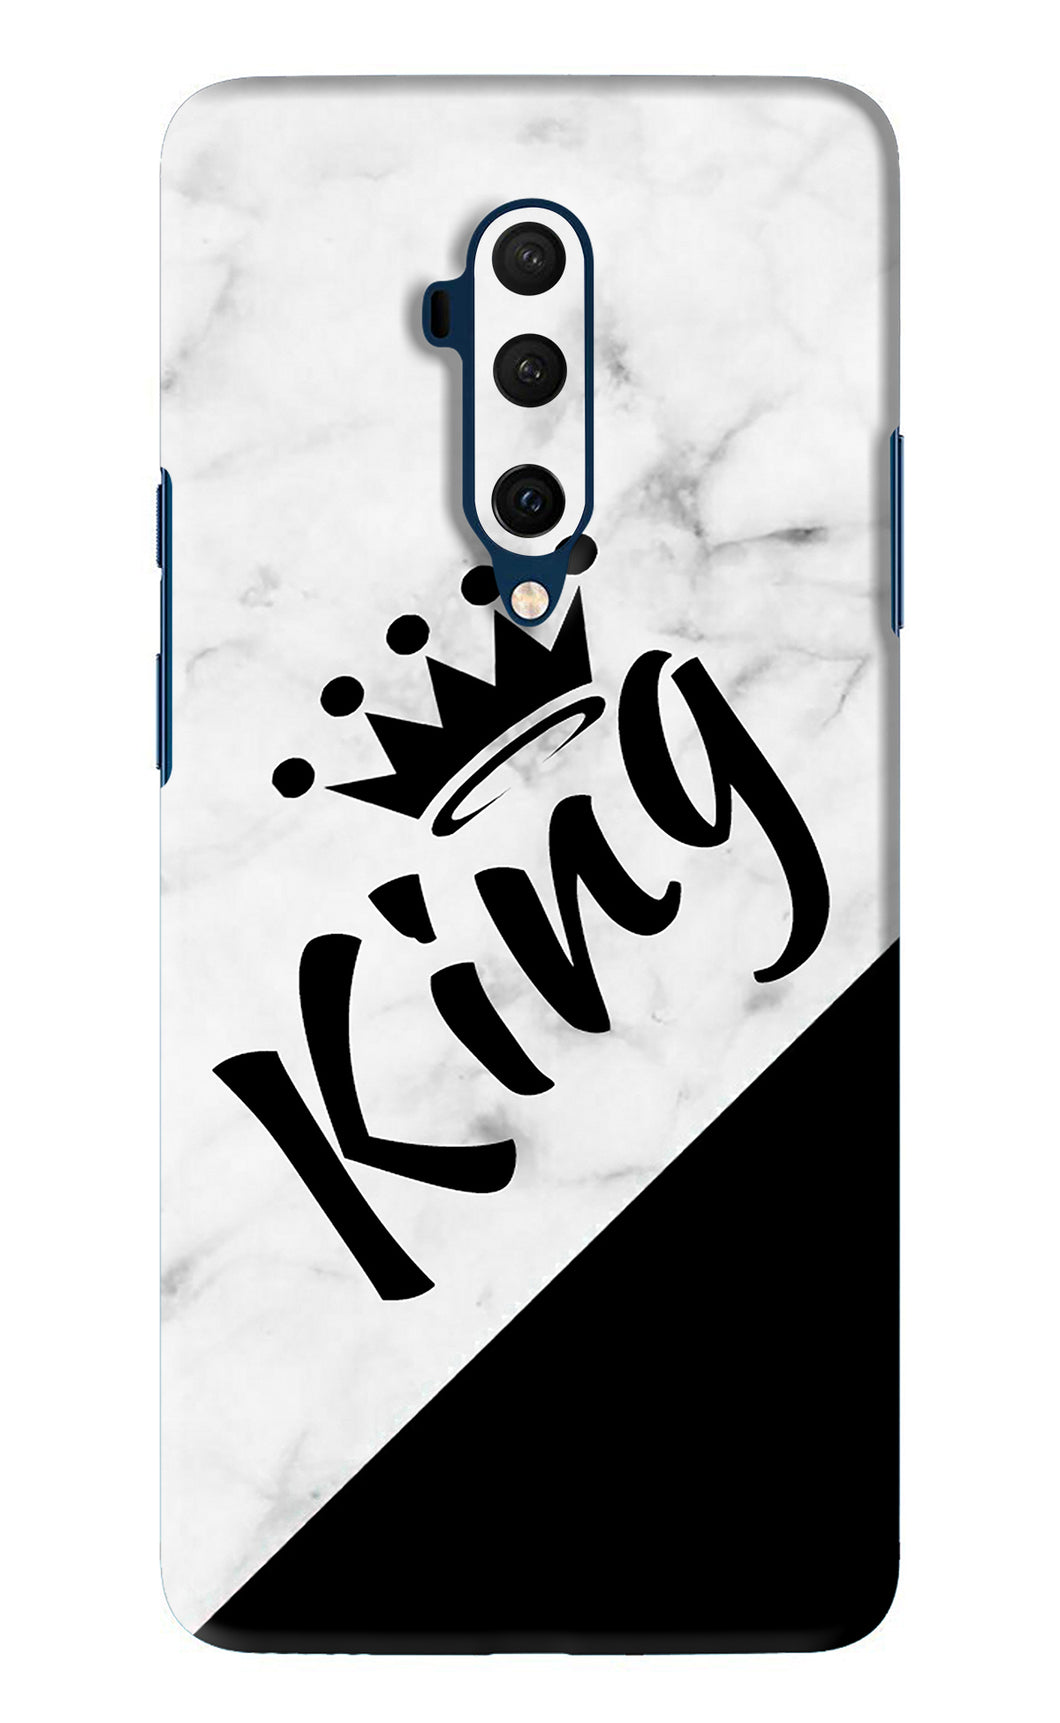 King OnePlus 7T Pro Back Skin Wrap